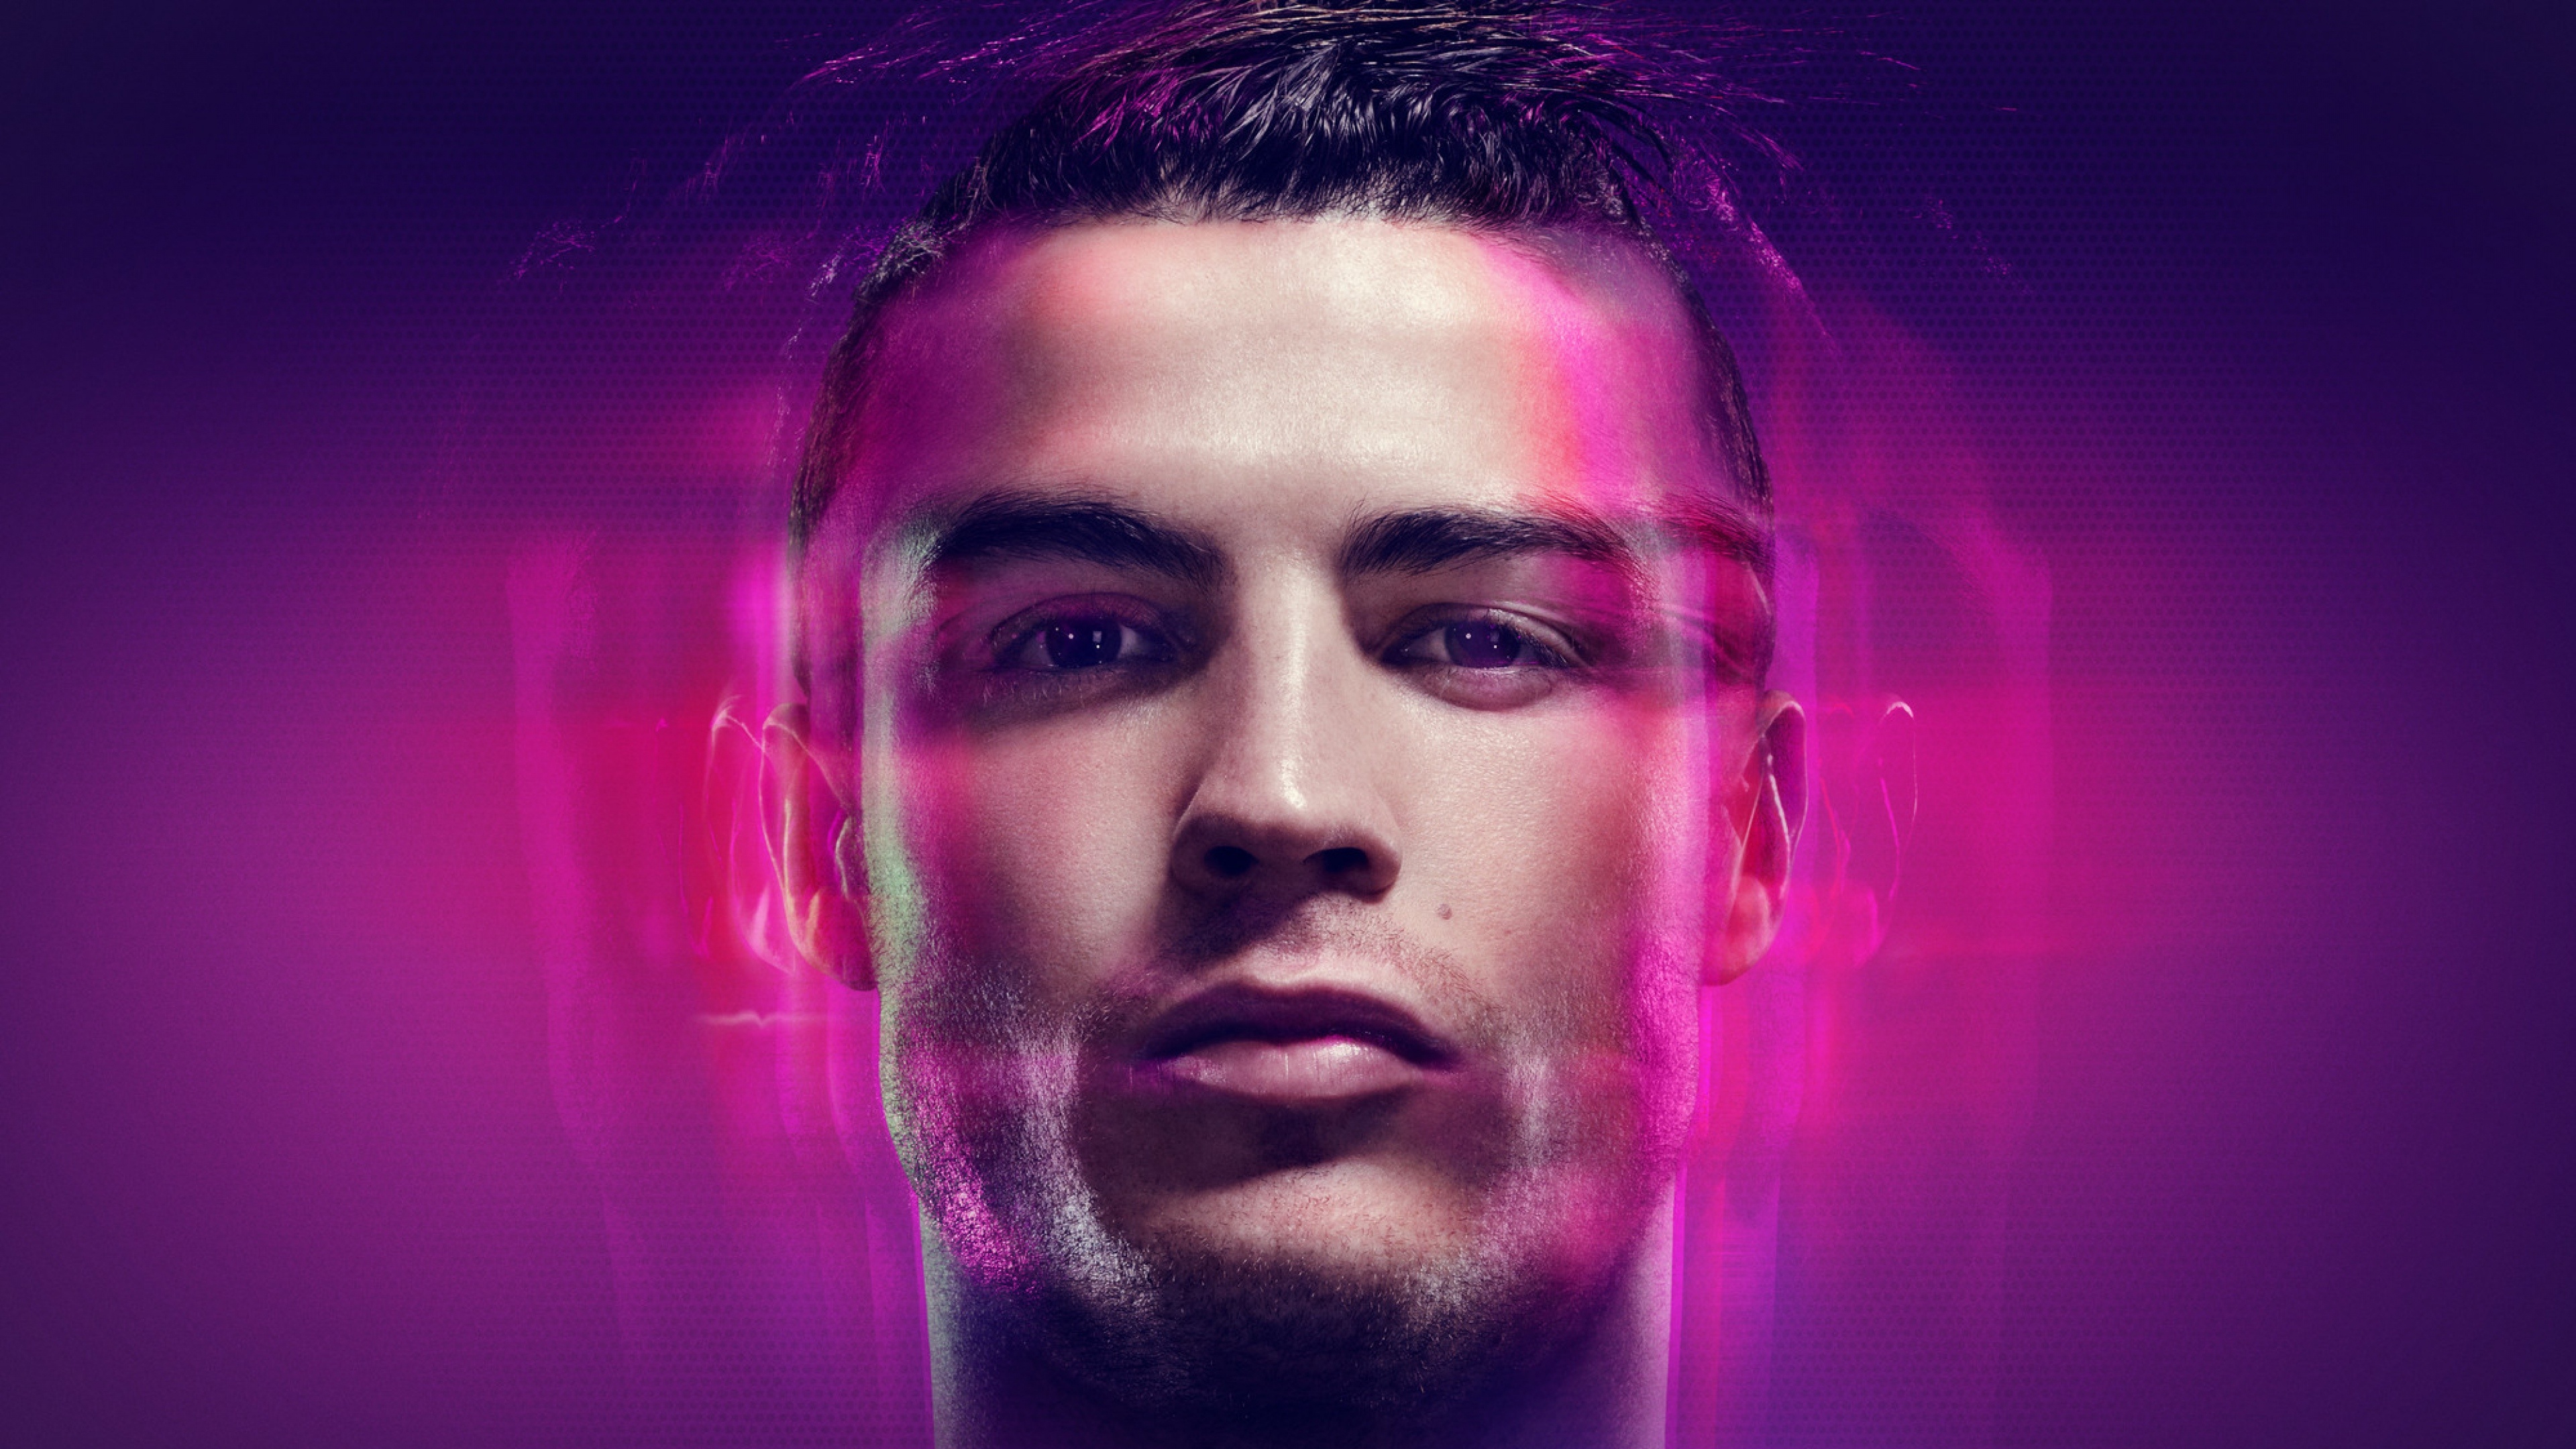 Cristiano Ronaldo 4K Wallpaper in jpg format for free download